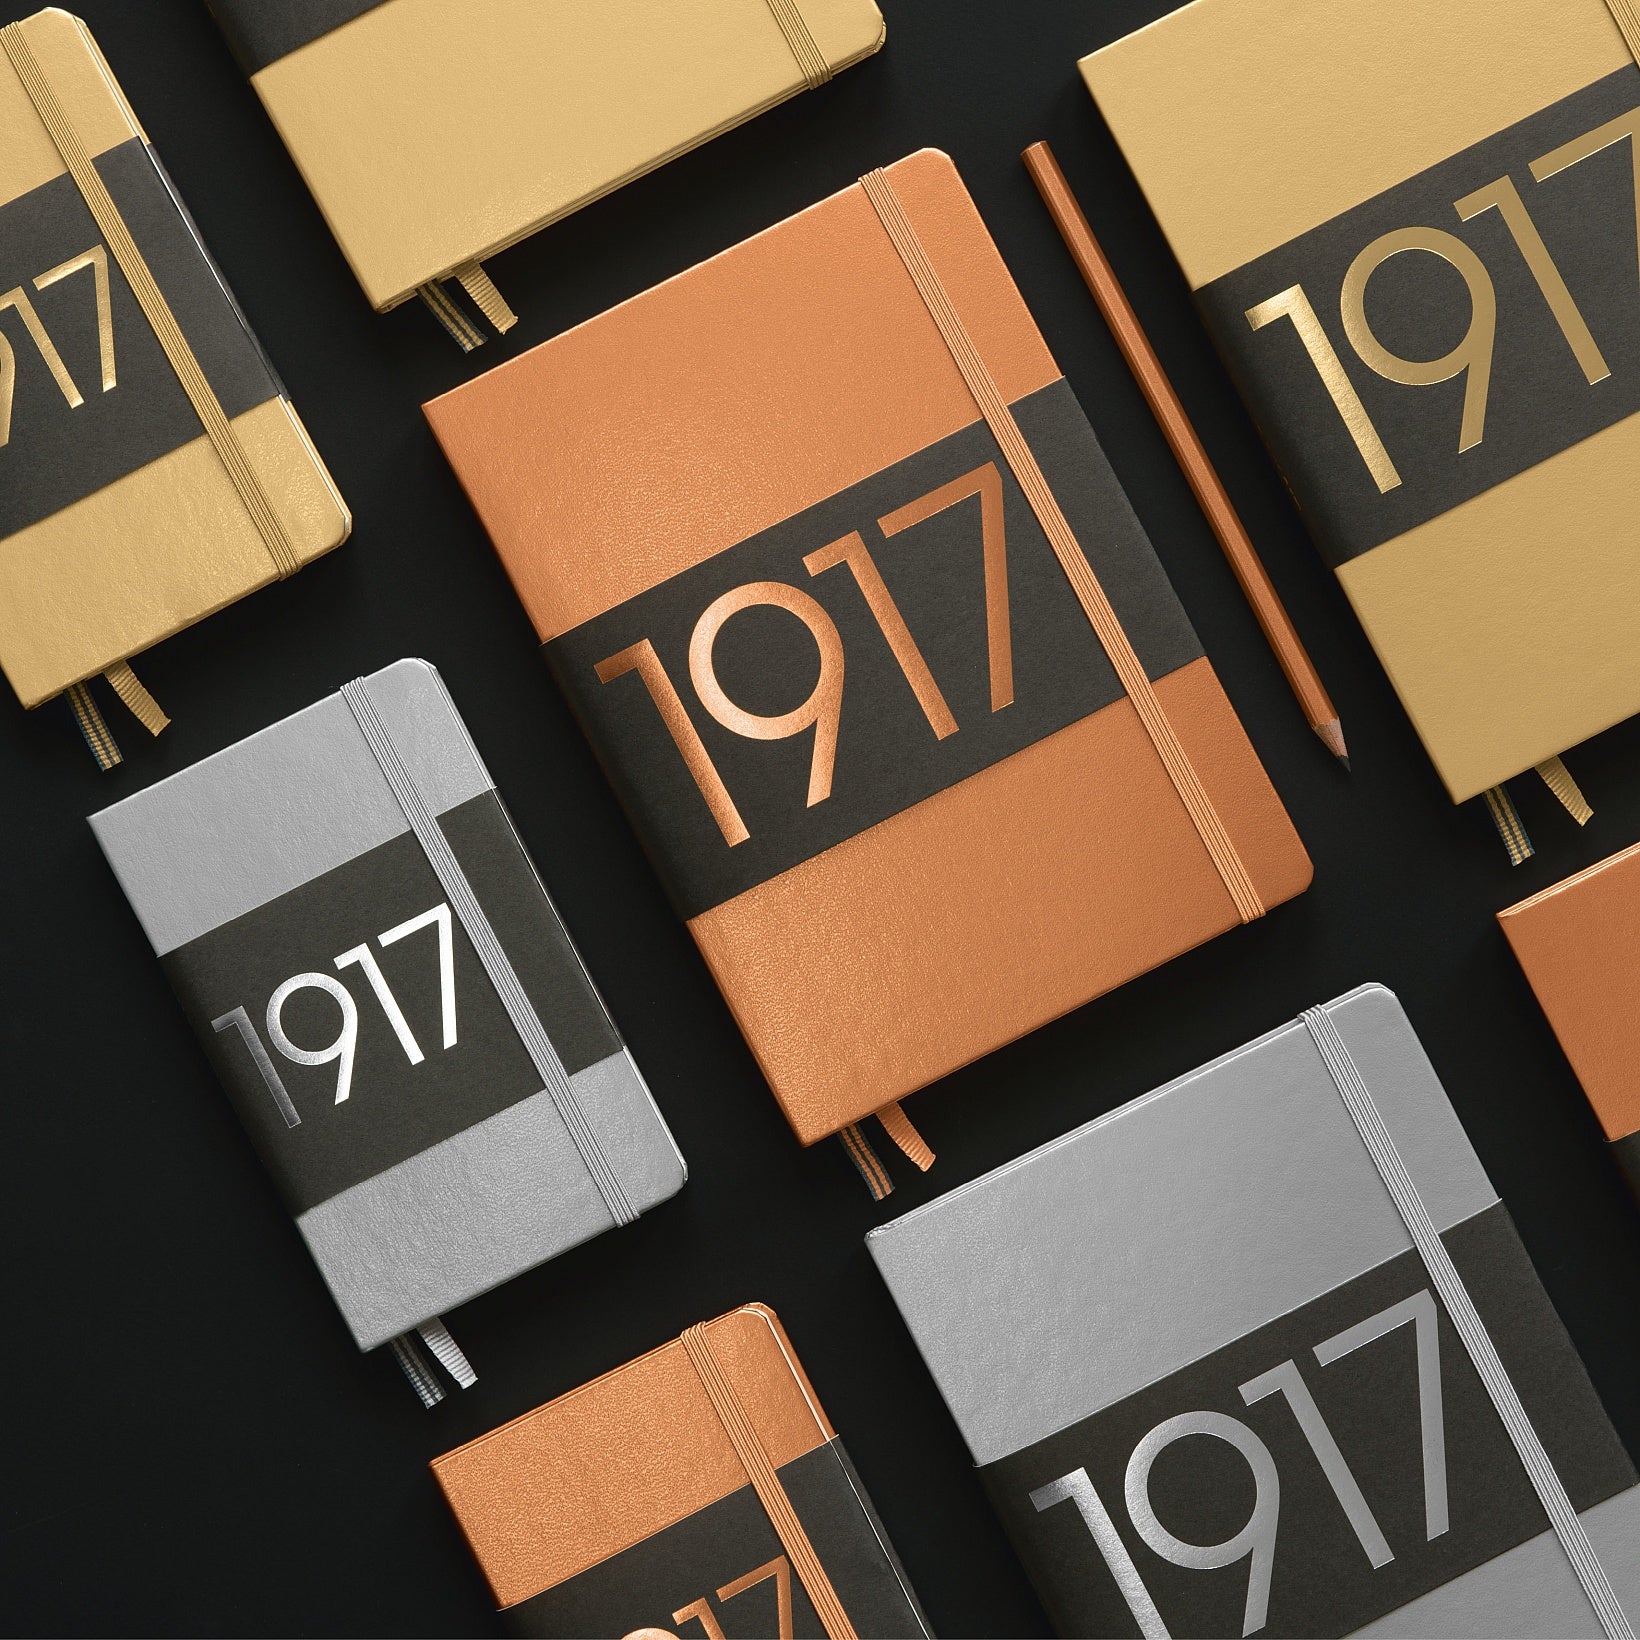 Leuchtturm1917 Notebook Medium (A5) Plain Gold Special Edition - Pencraft the boutique